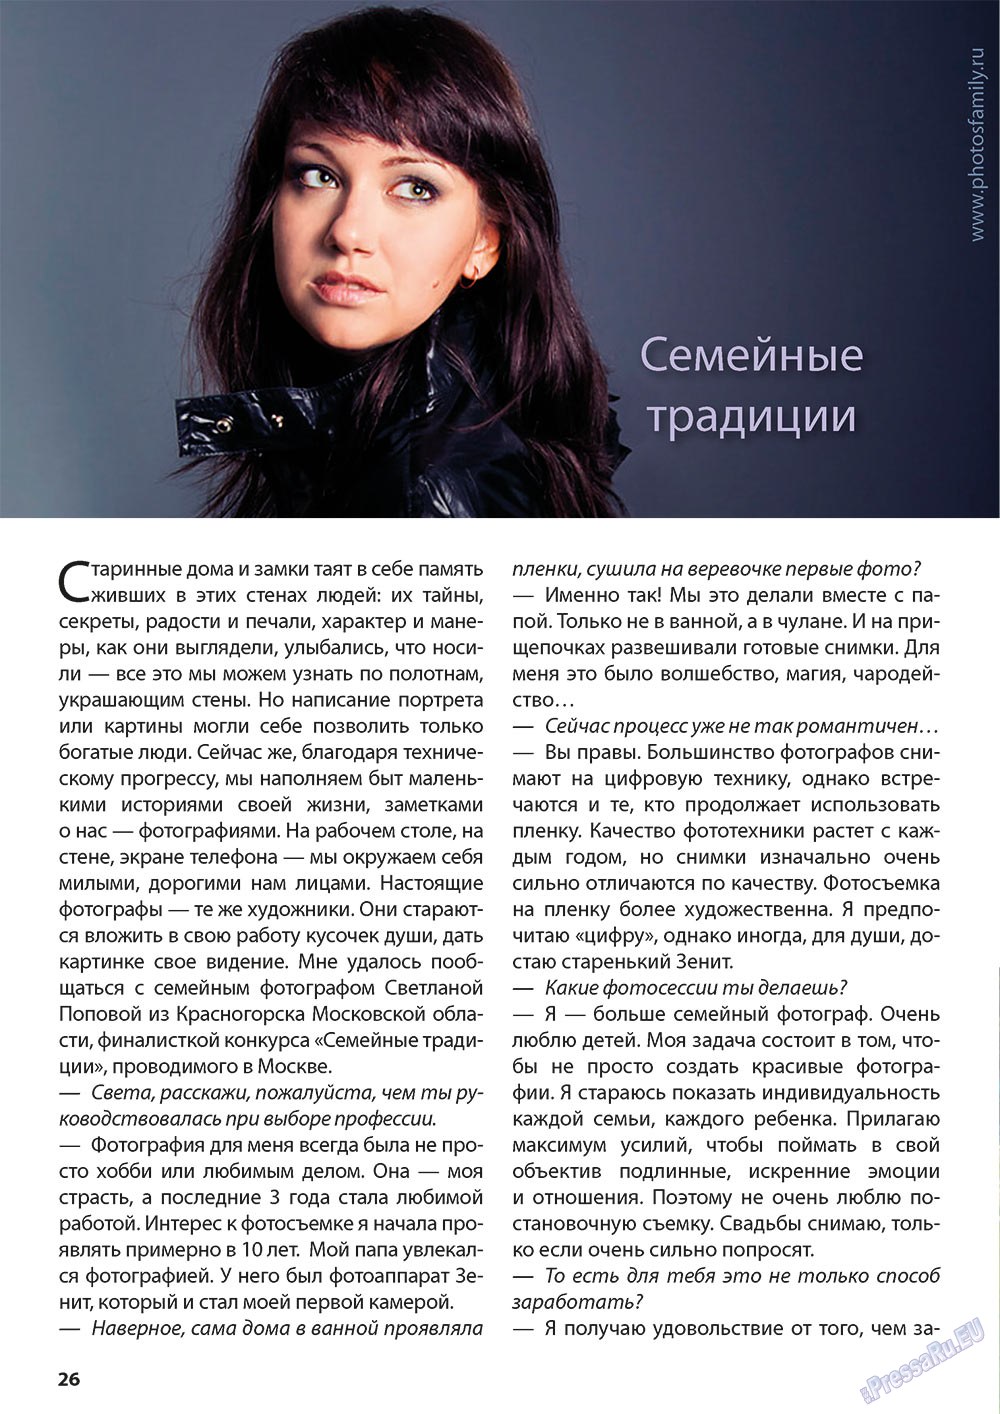 Wadim, журнал. 2012 №8 стр.26